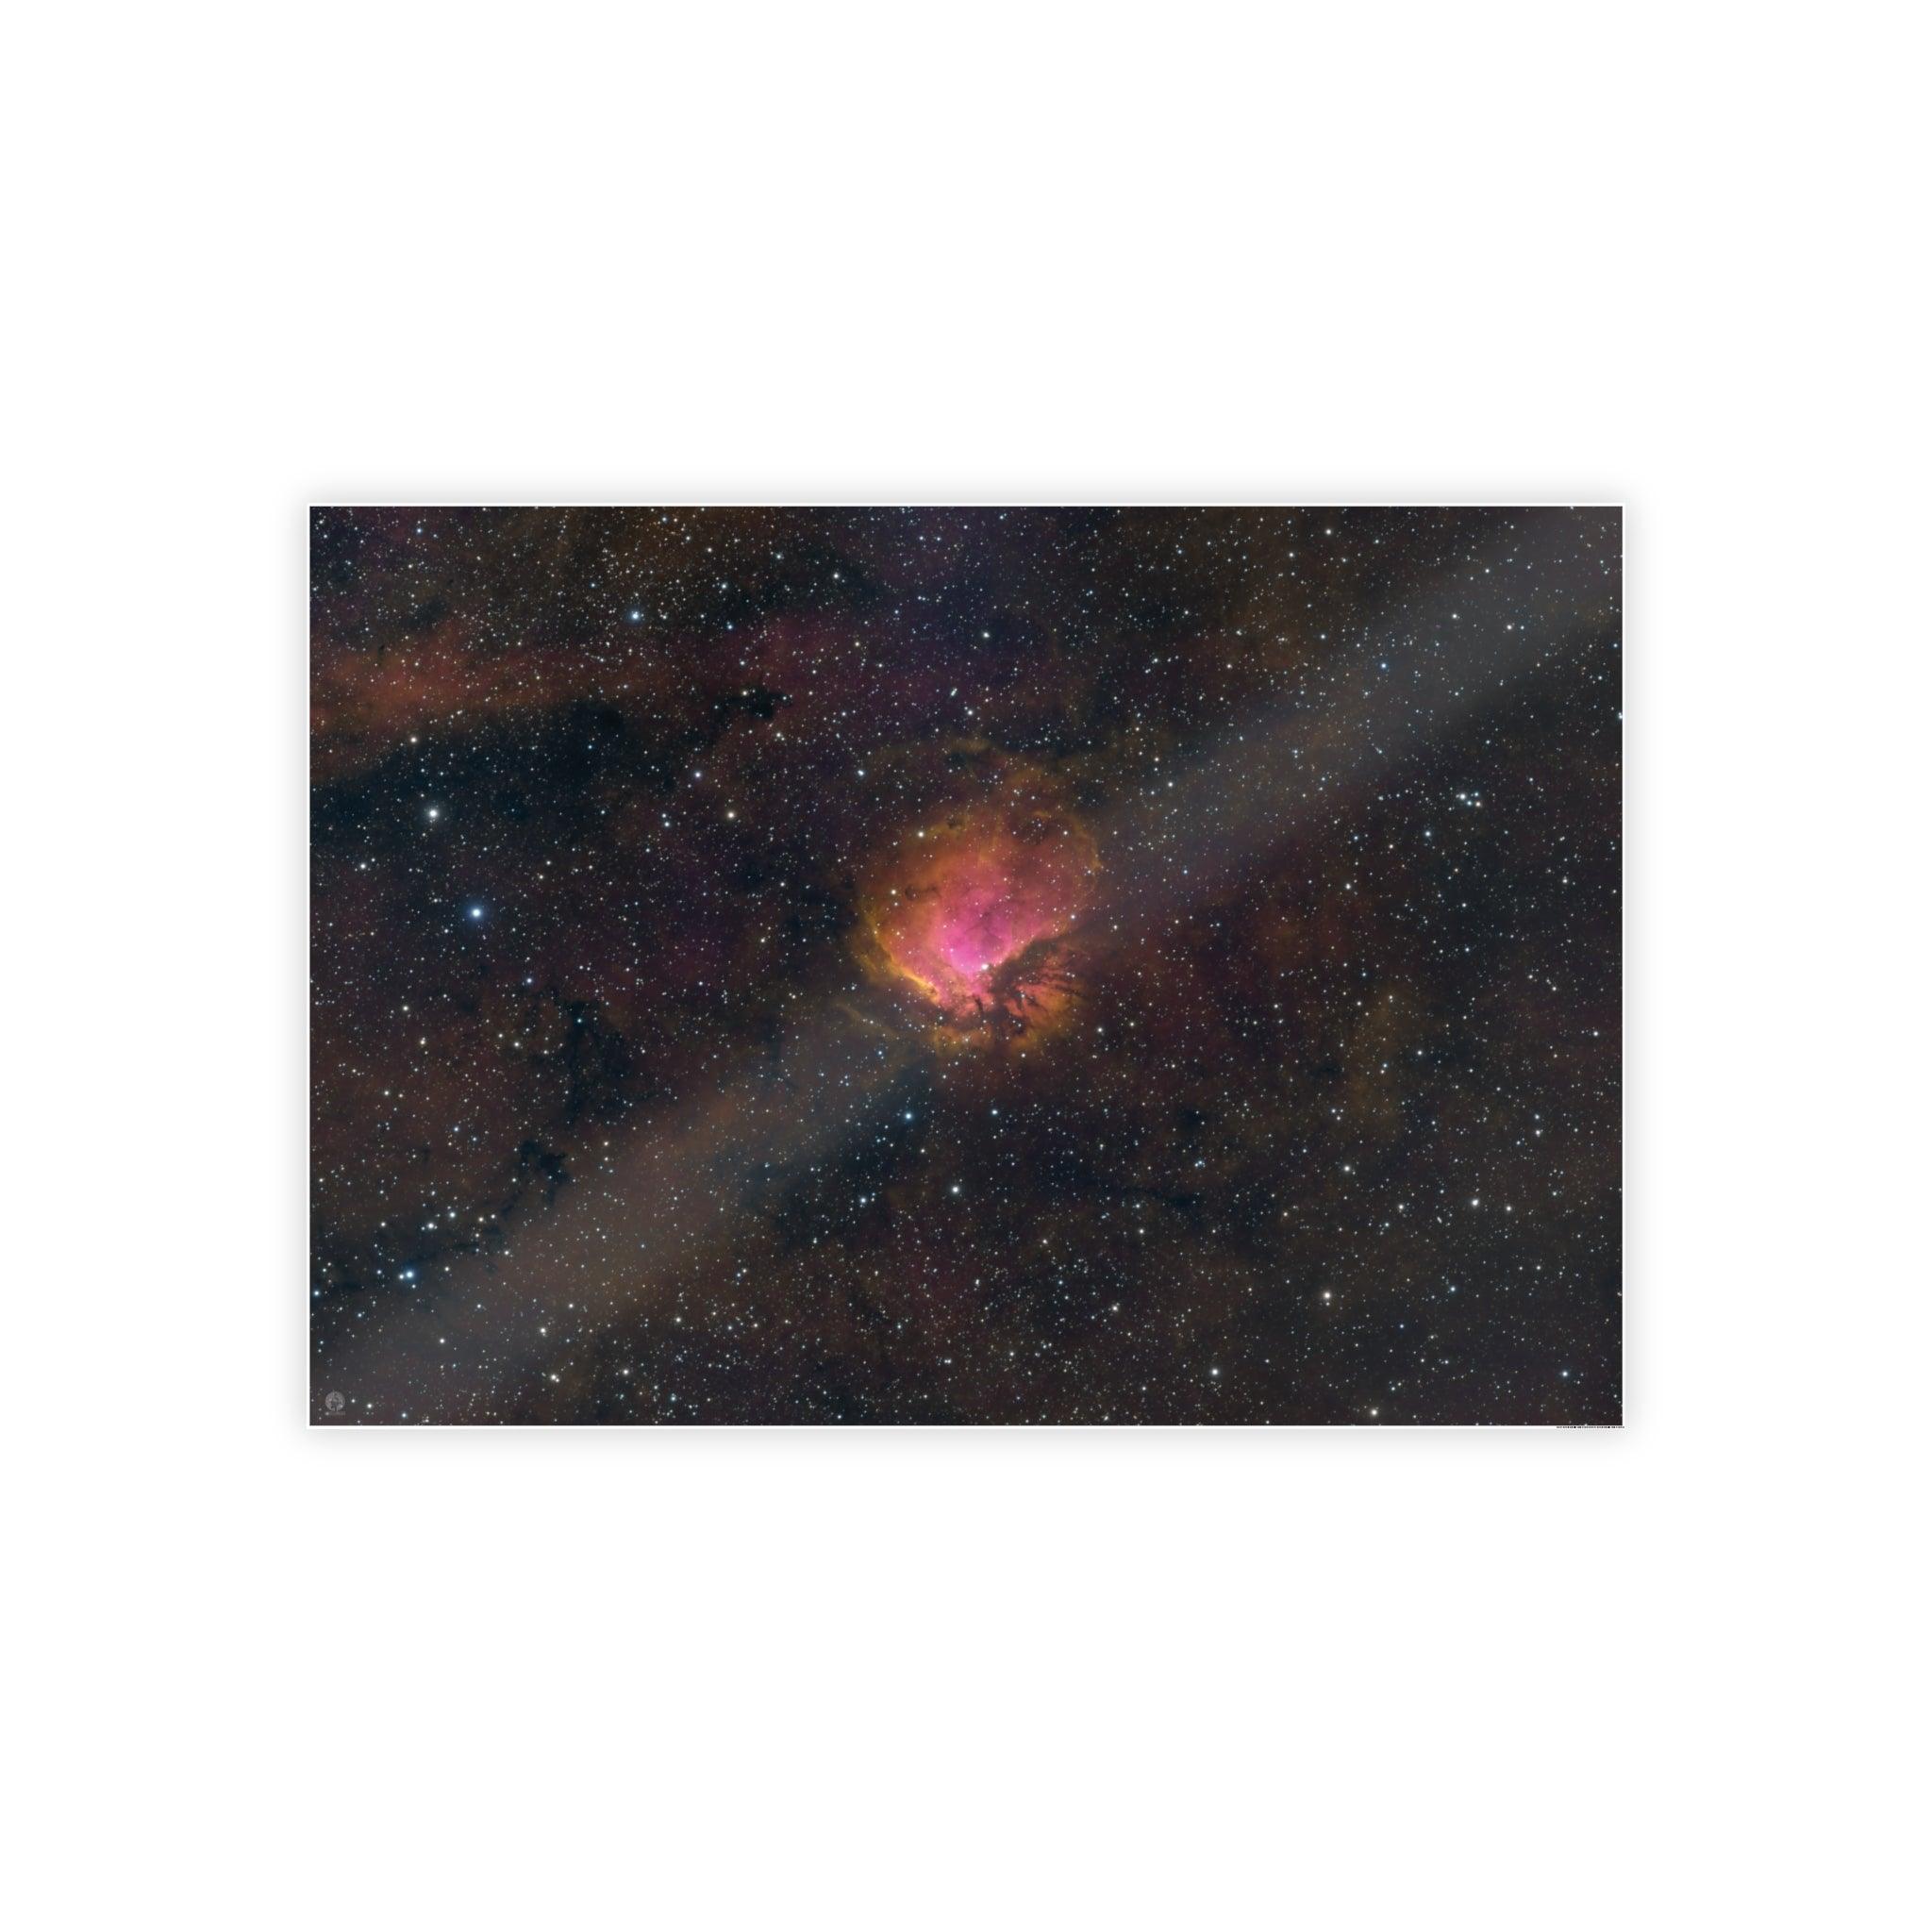 Poster of the Nebula SH2-112